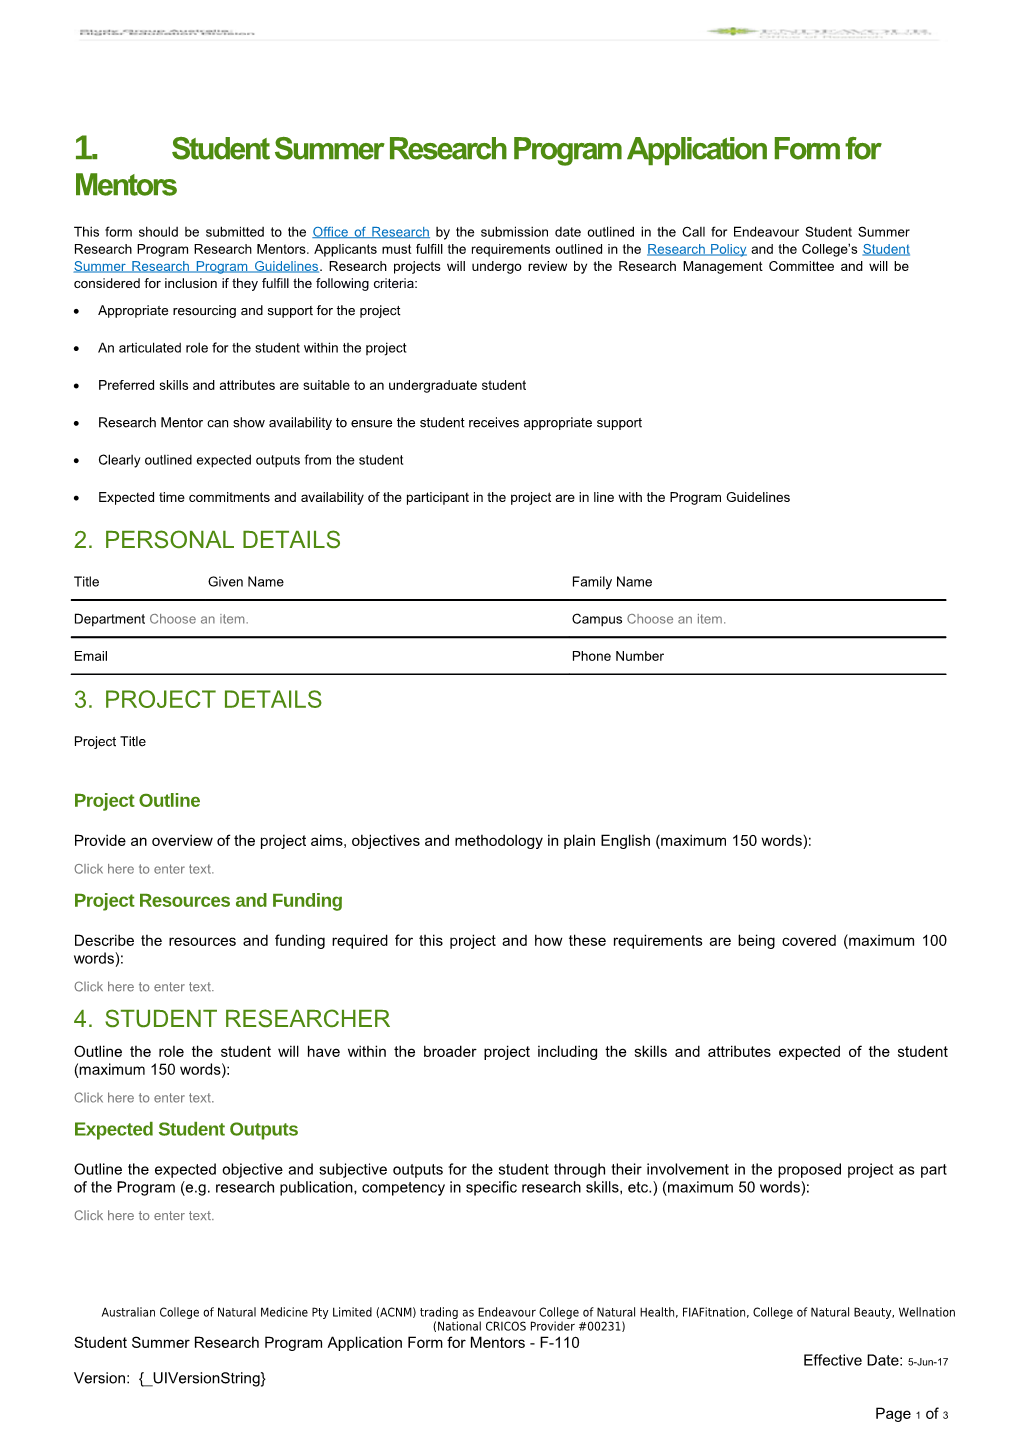 Student Summer Research Program Application Form For Mentors